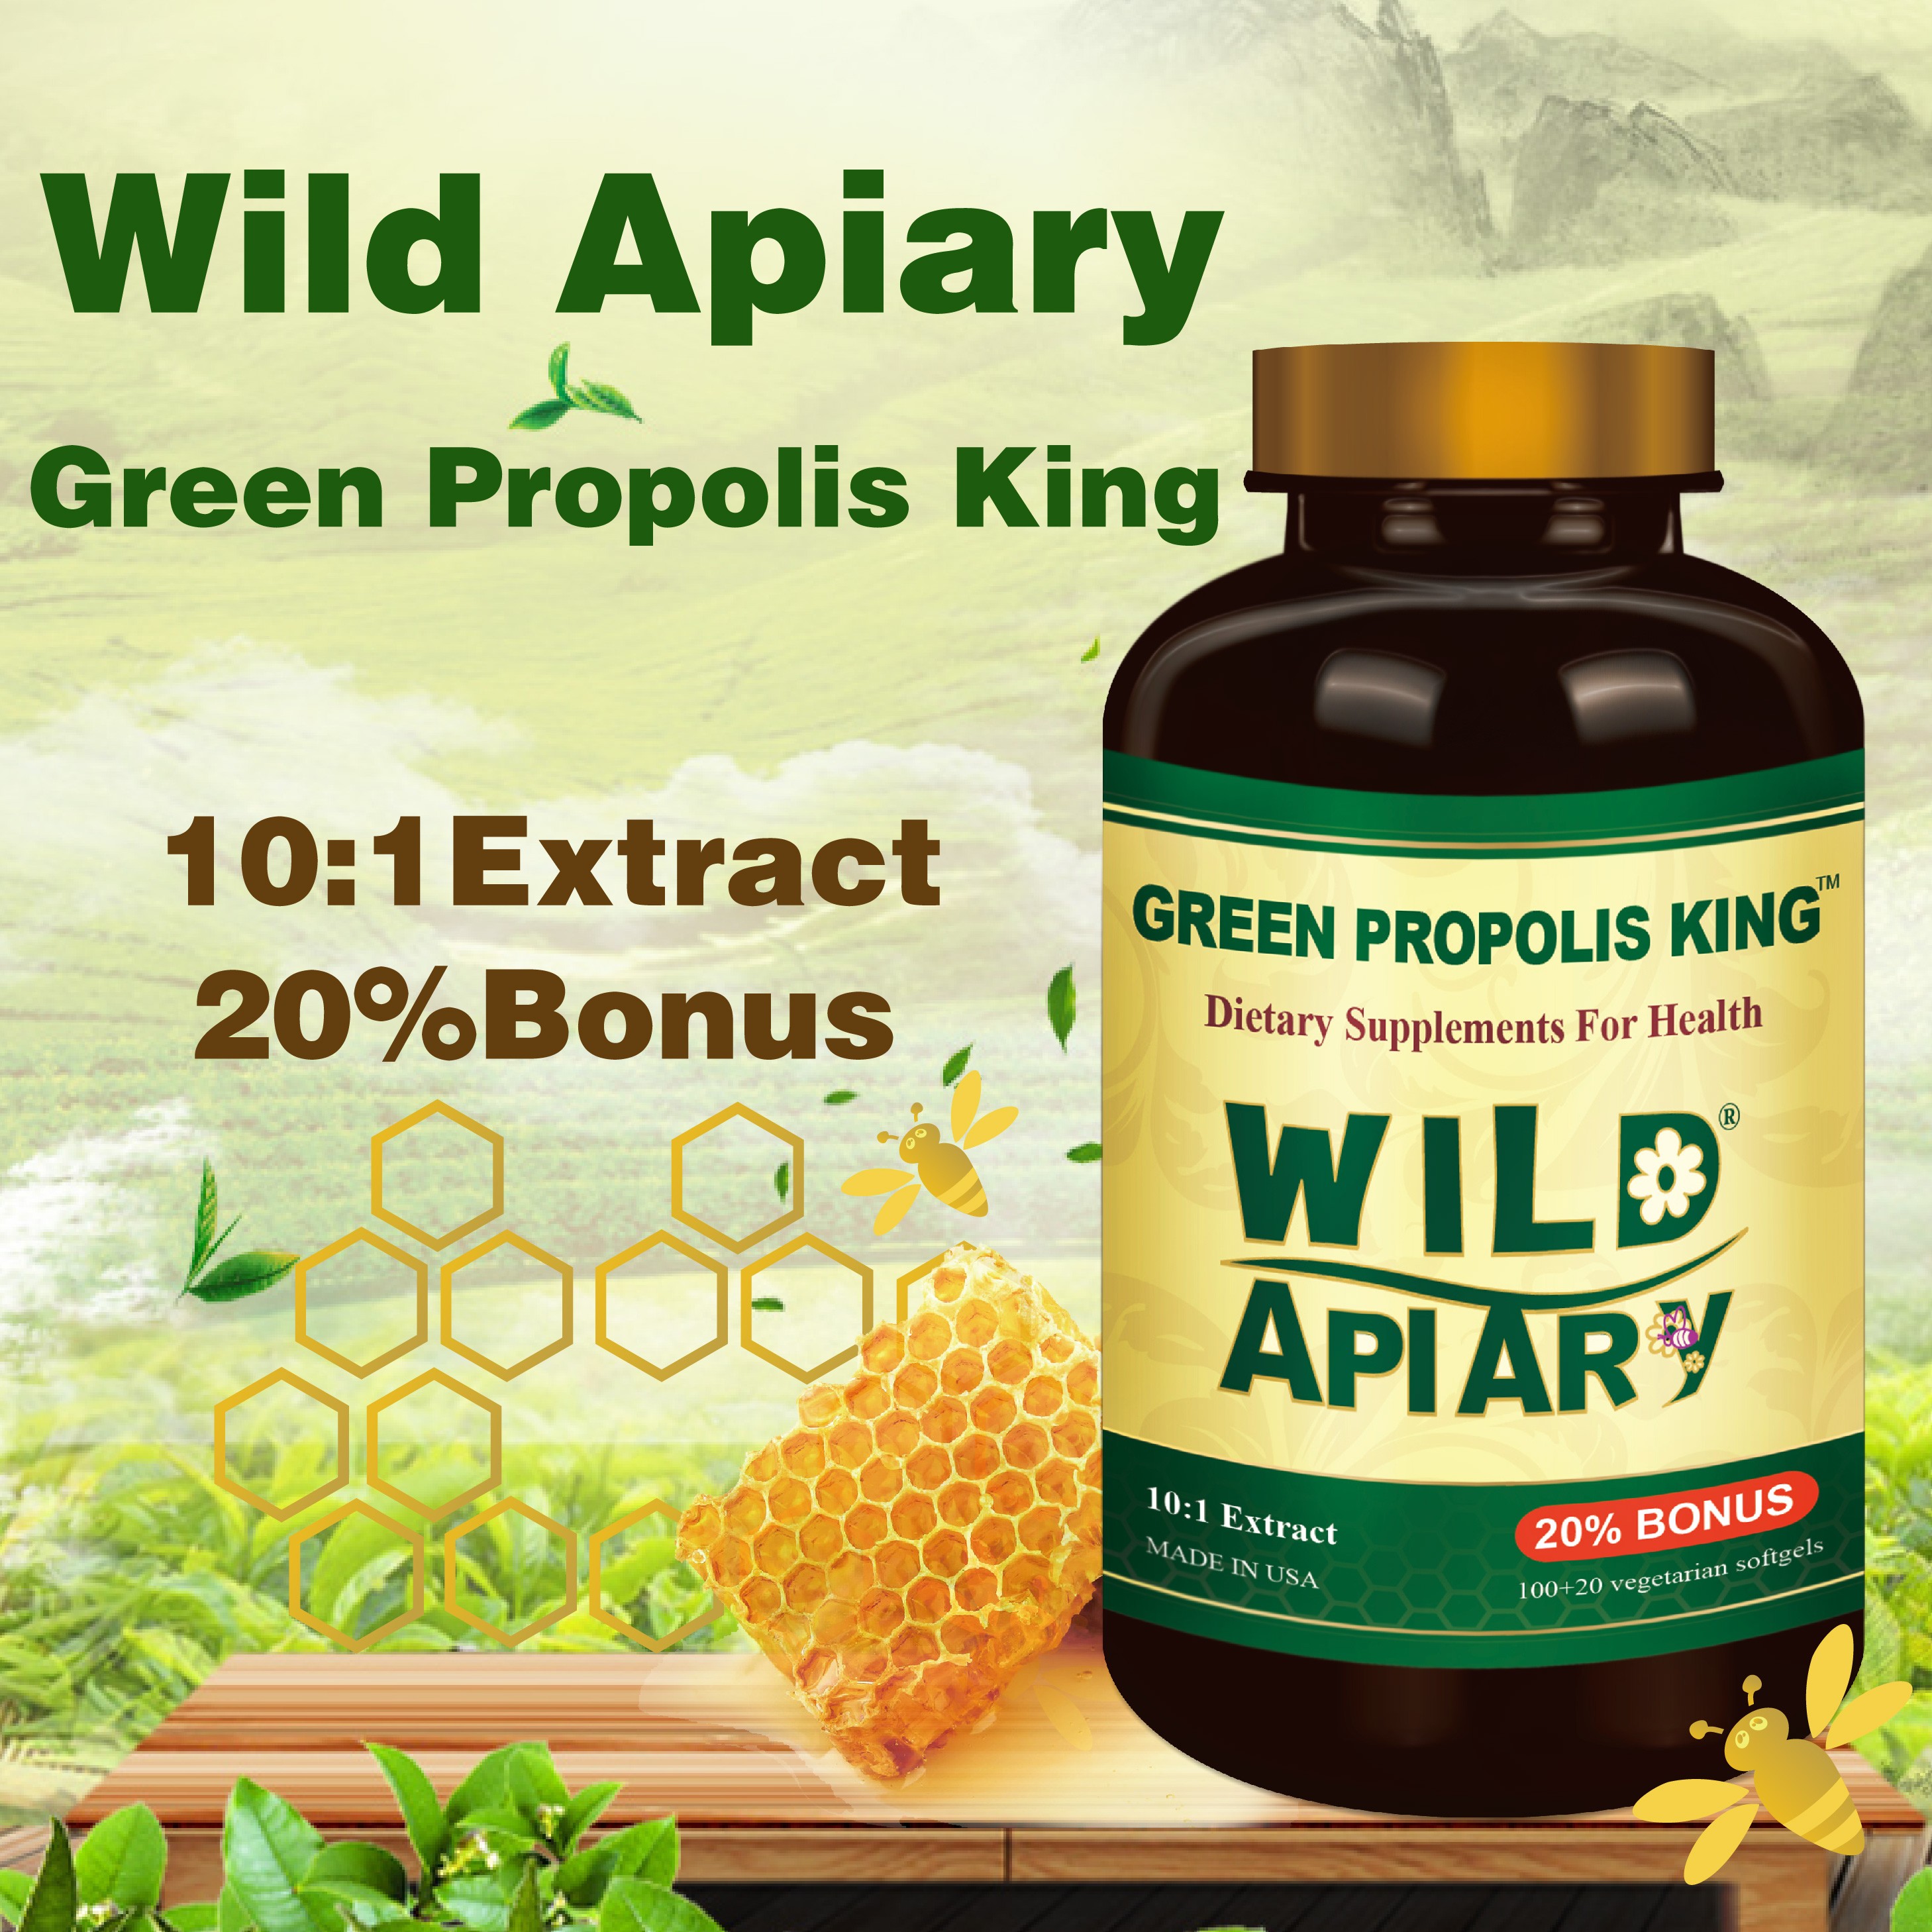 Wild Apiary Brazilian Green Bee Propolis King Capsule ■ Original Price $39.99 ■ 120 Vegetarian Softgel